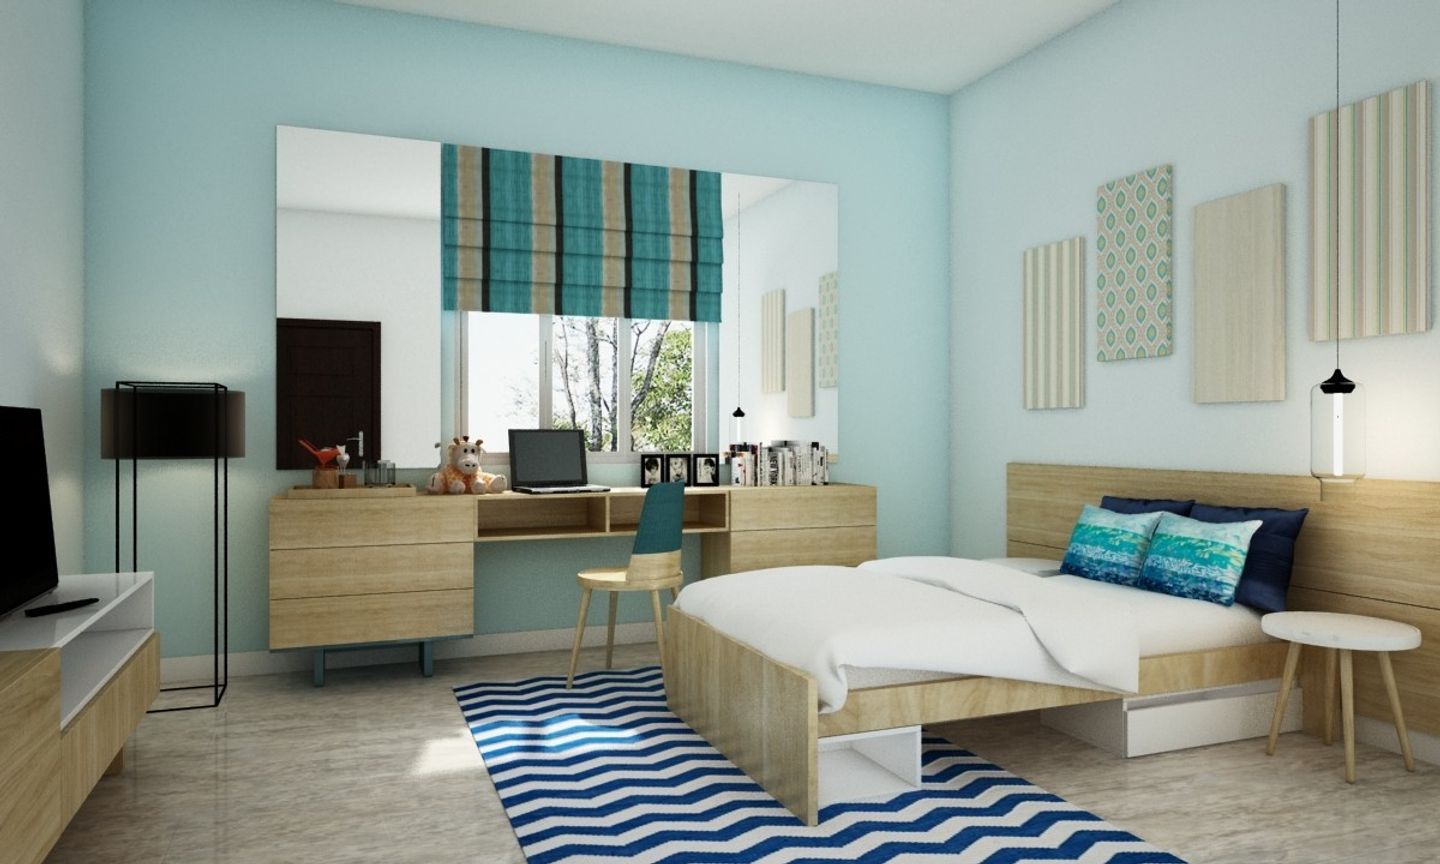 Modern Kid's Room Design With Wooden Textures